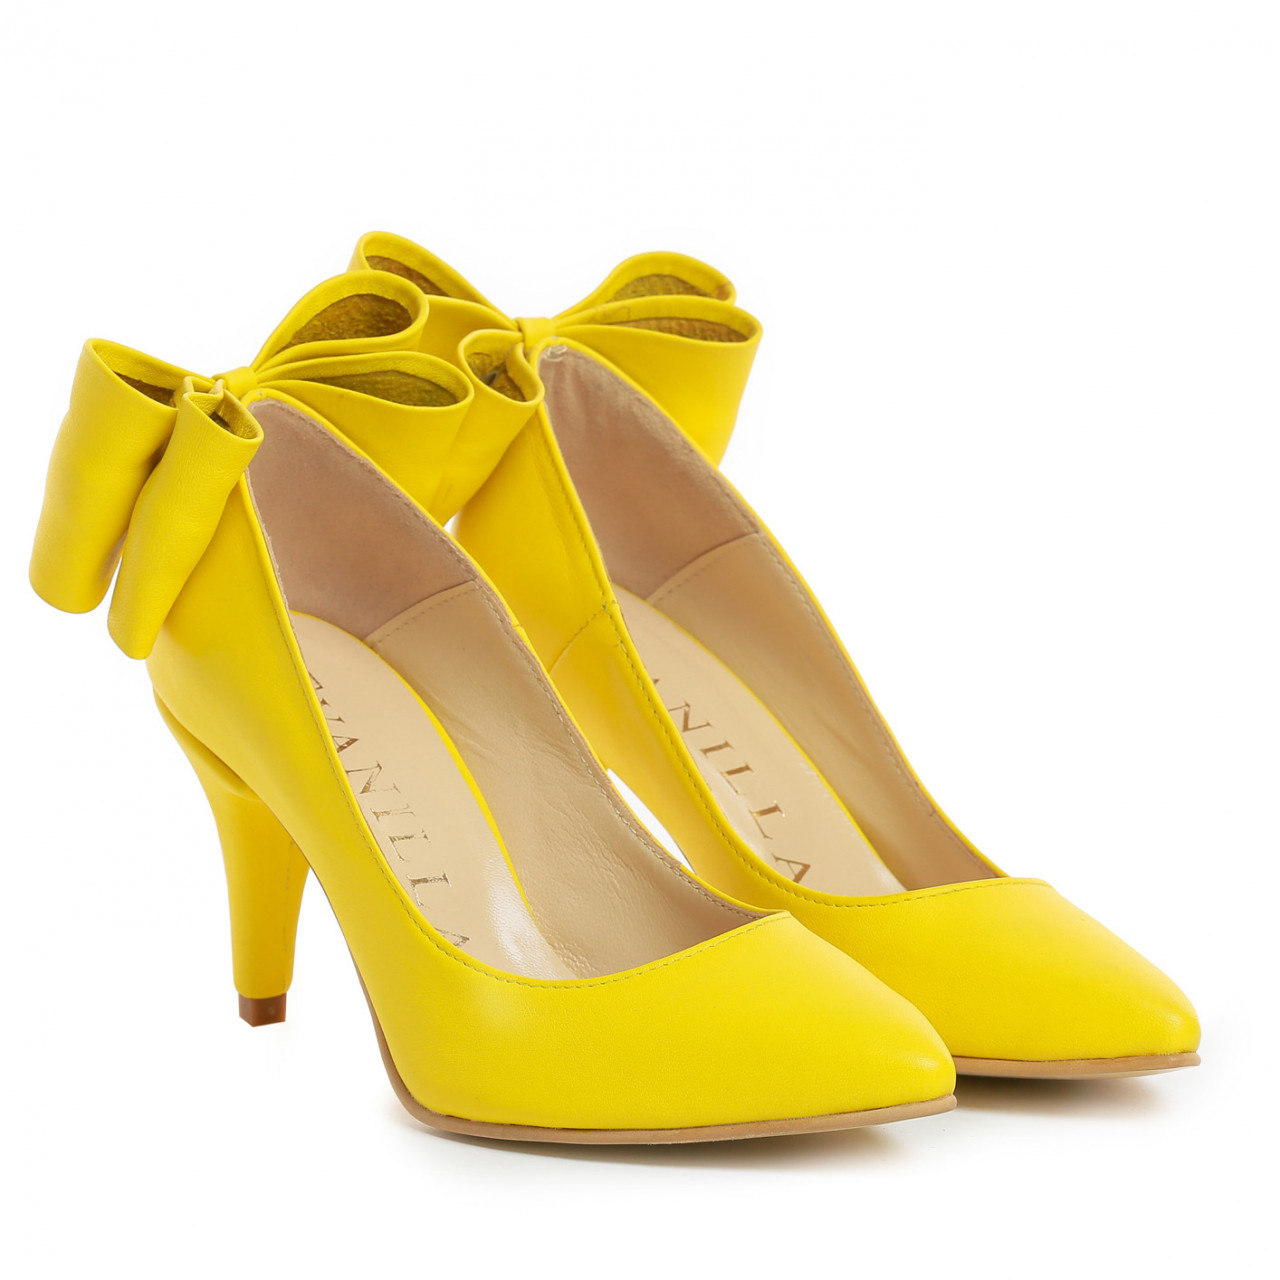 Pantofi Stiletto cu toc Cleopatra Yellow Toc mic